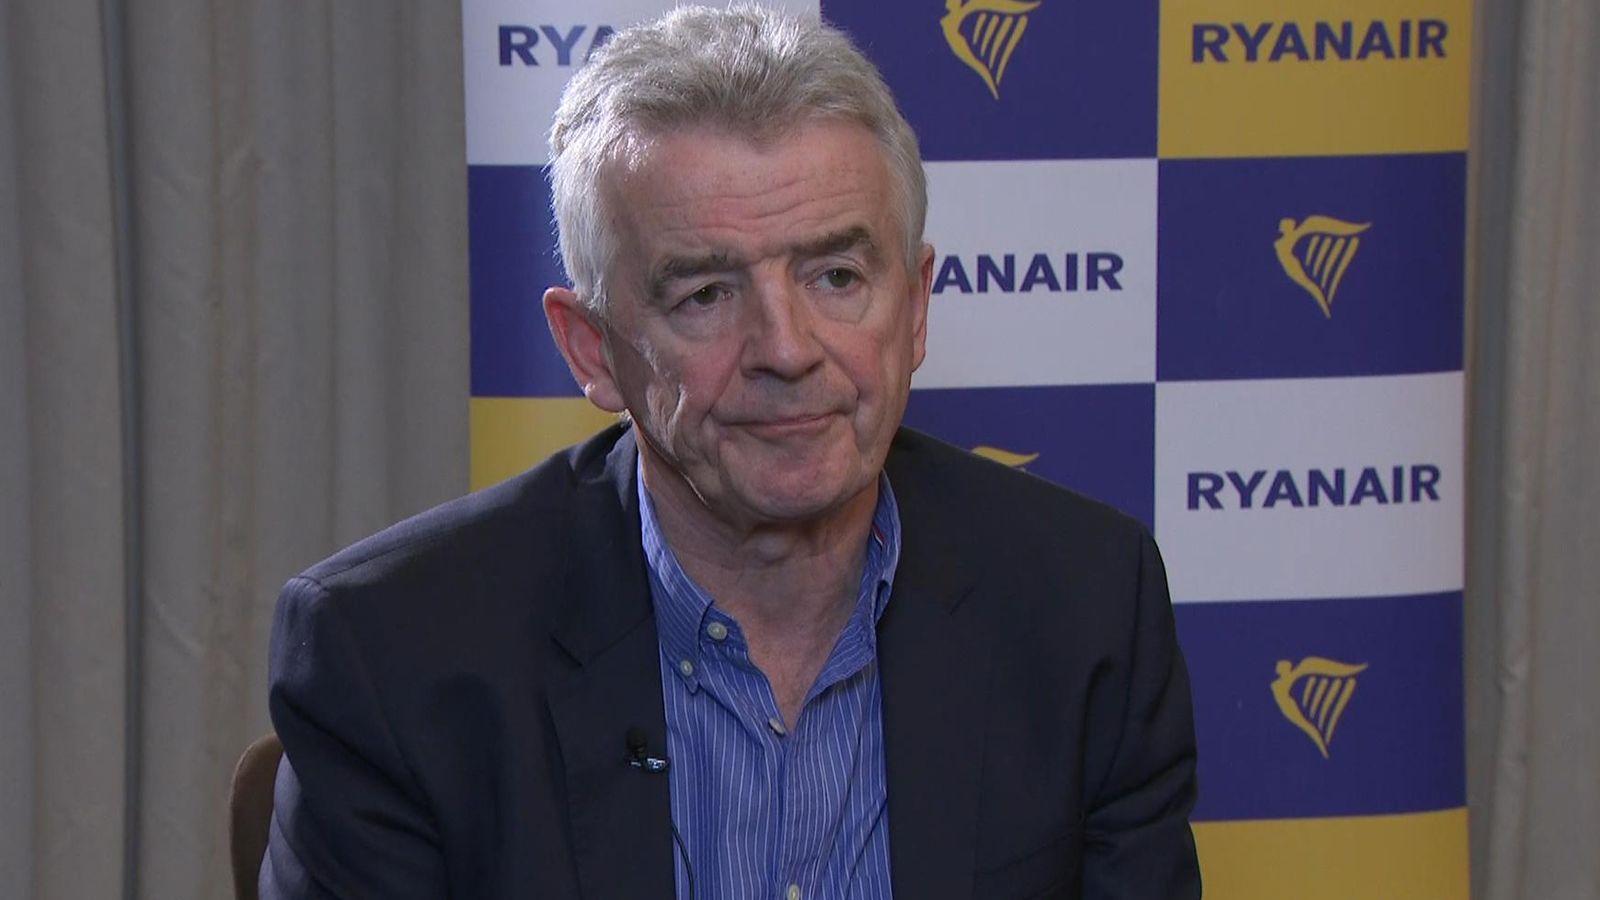 Ryanair boss declares passengers are safe despite Boeing issues